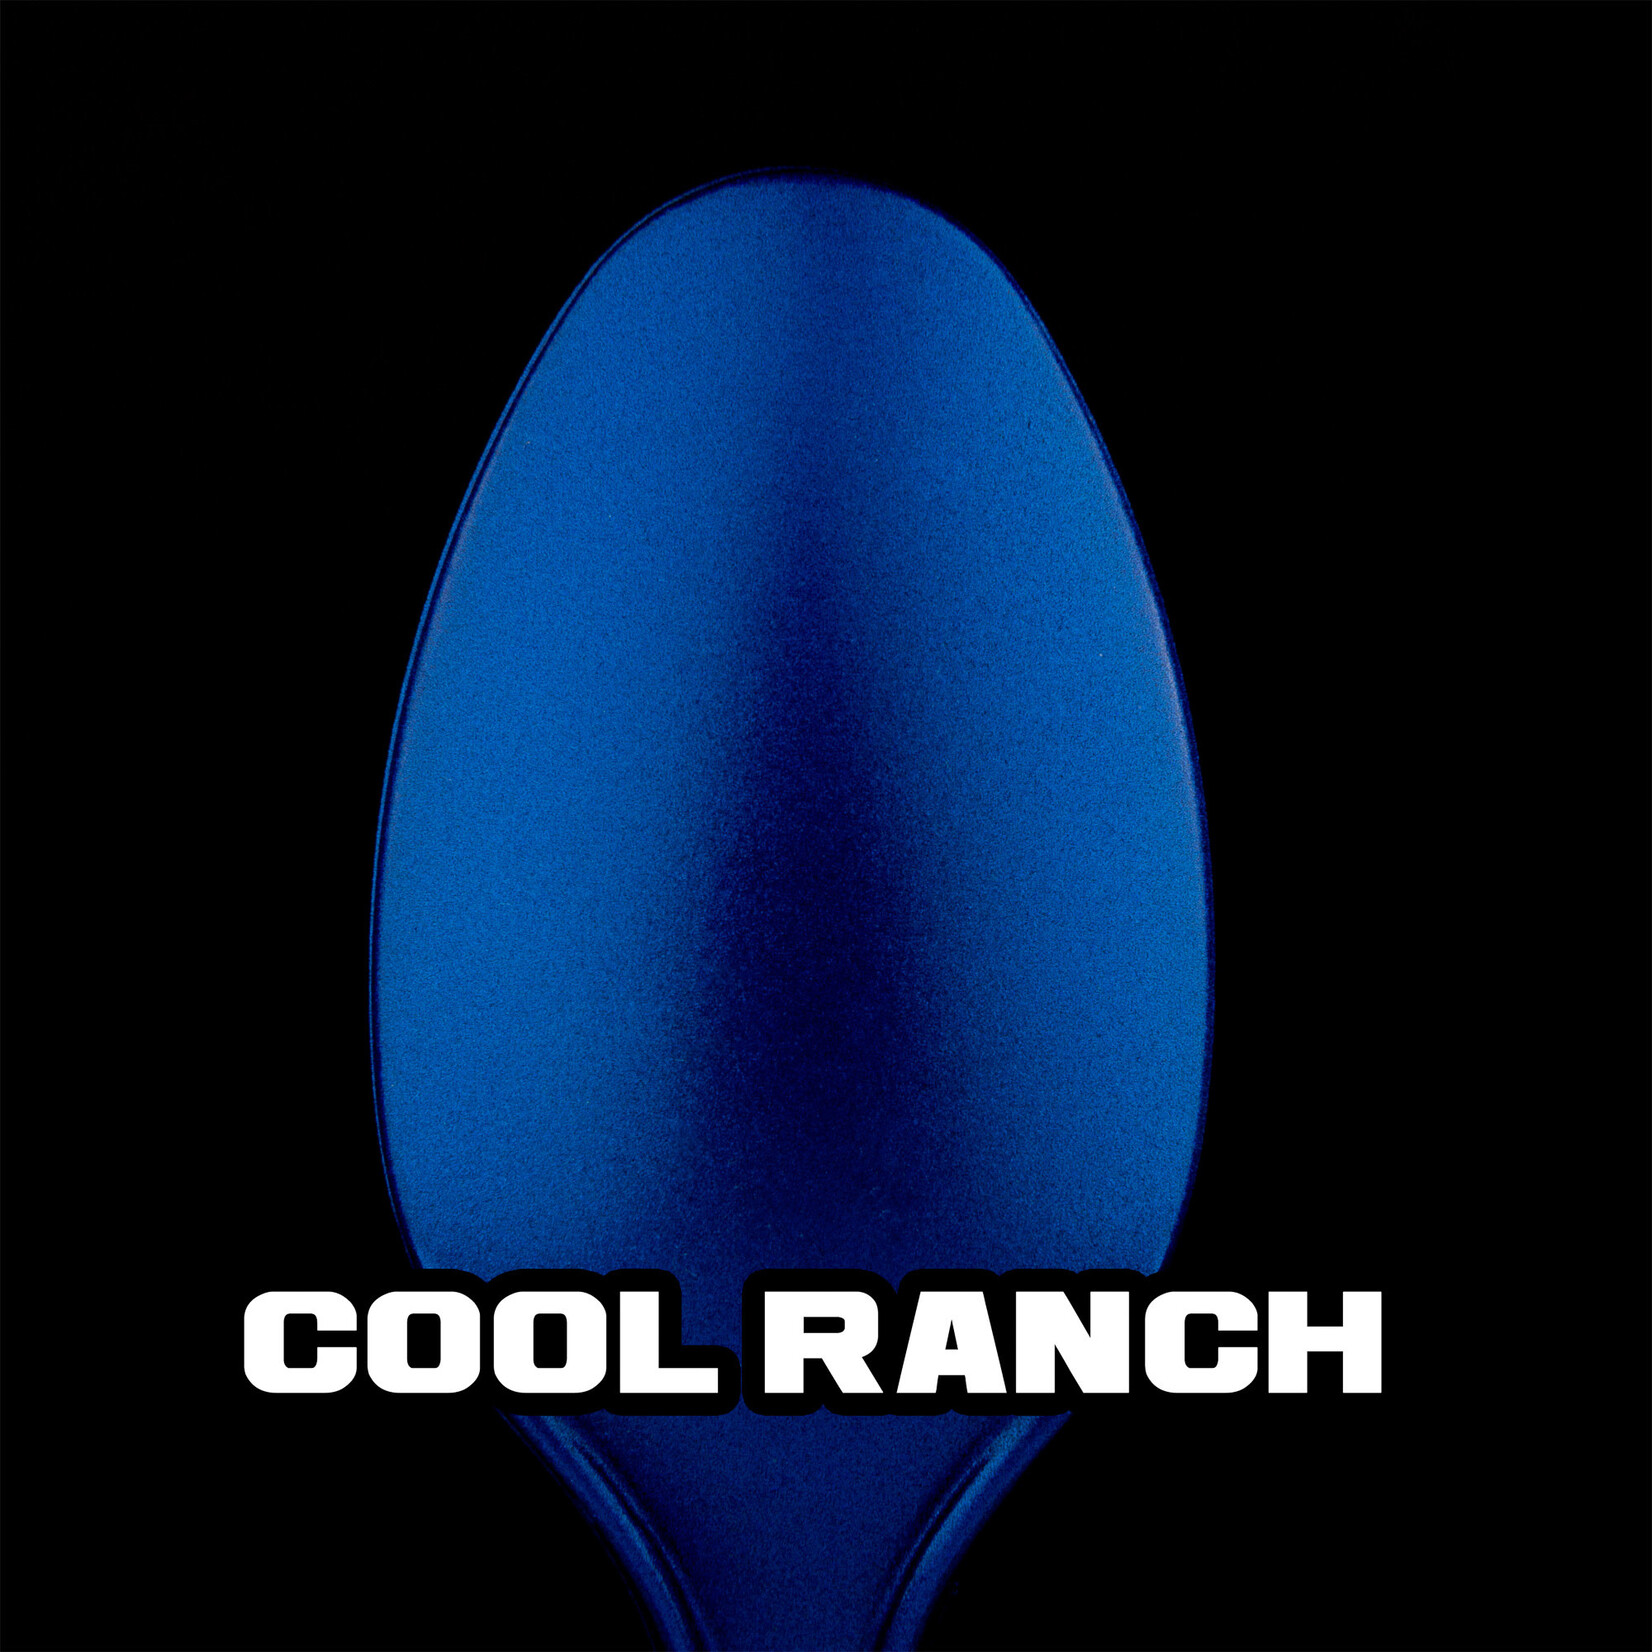 Turbo Dork Turbo Dork Metallic: Cool Ranch